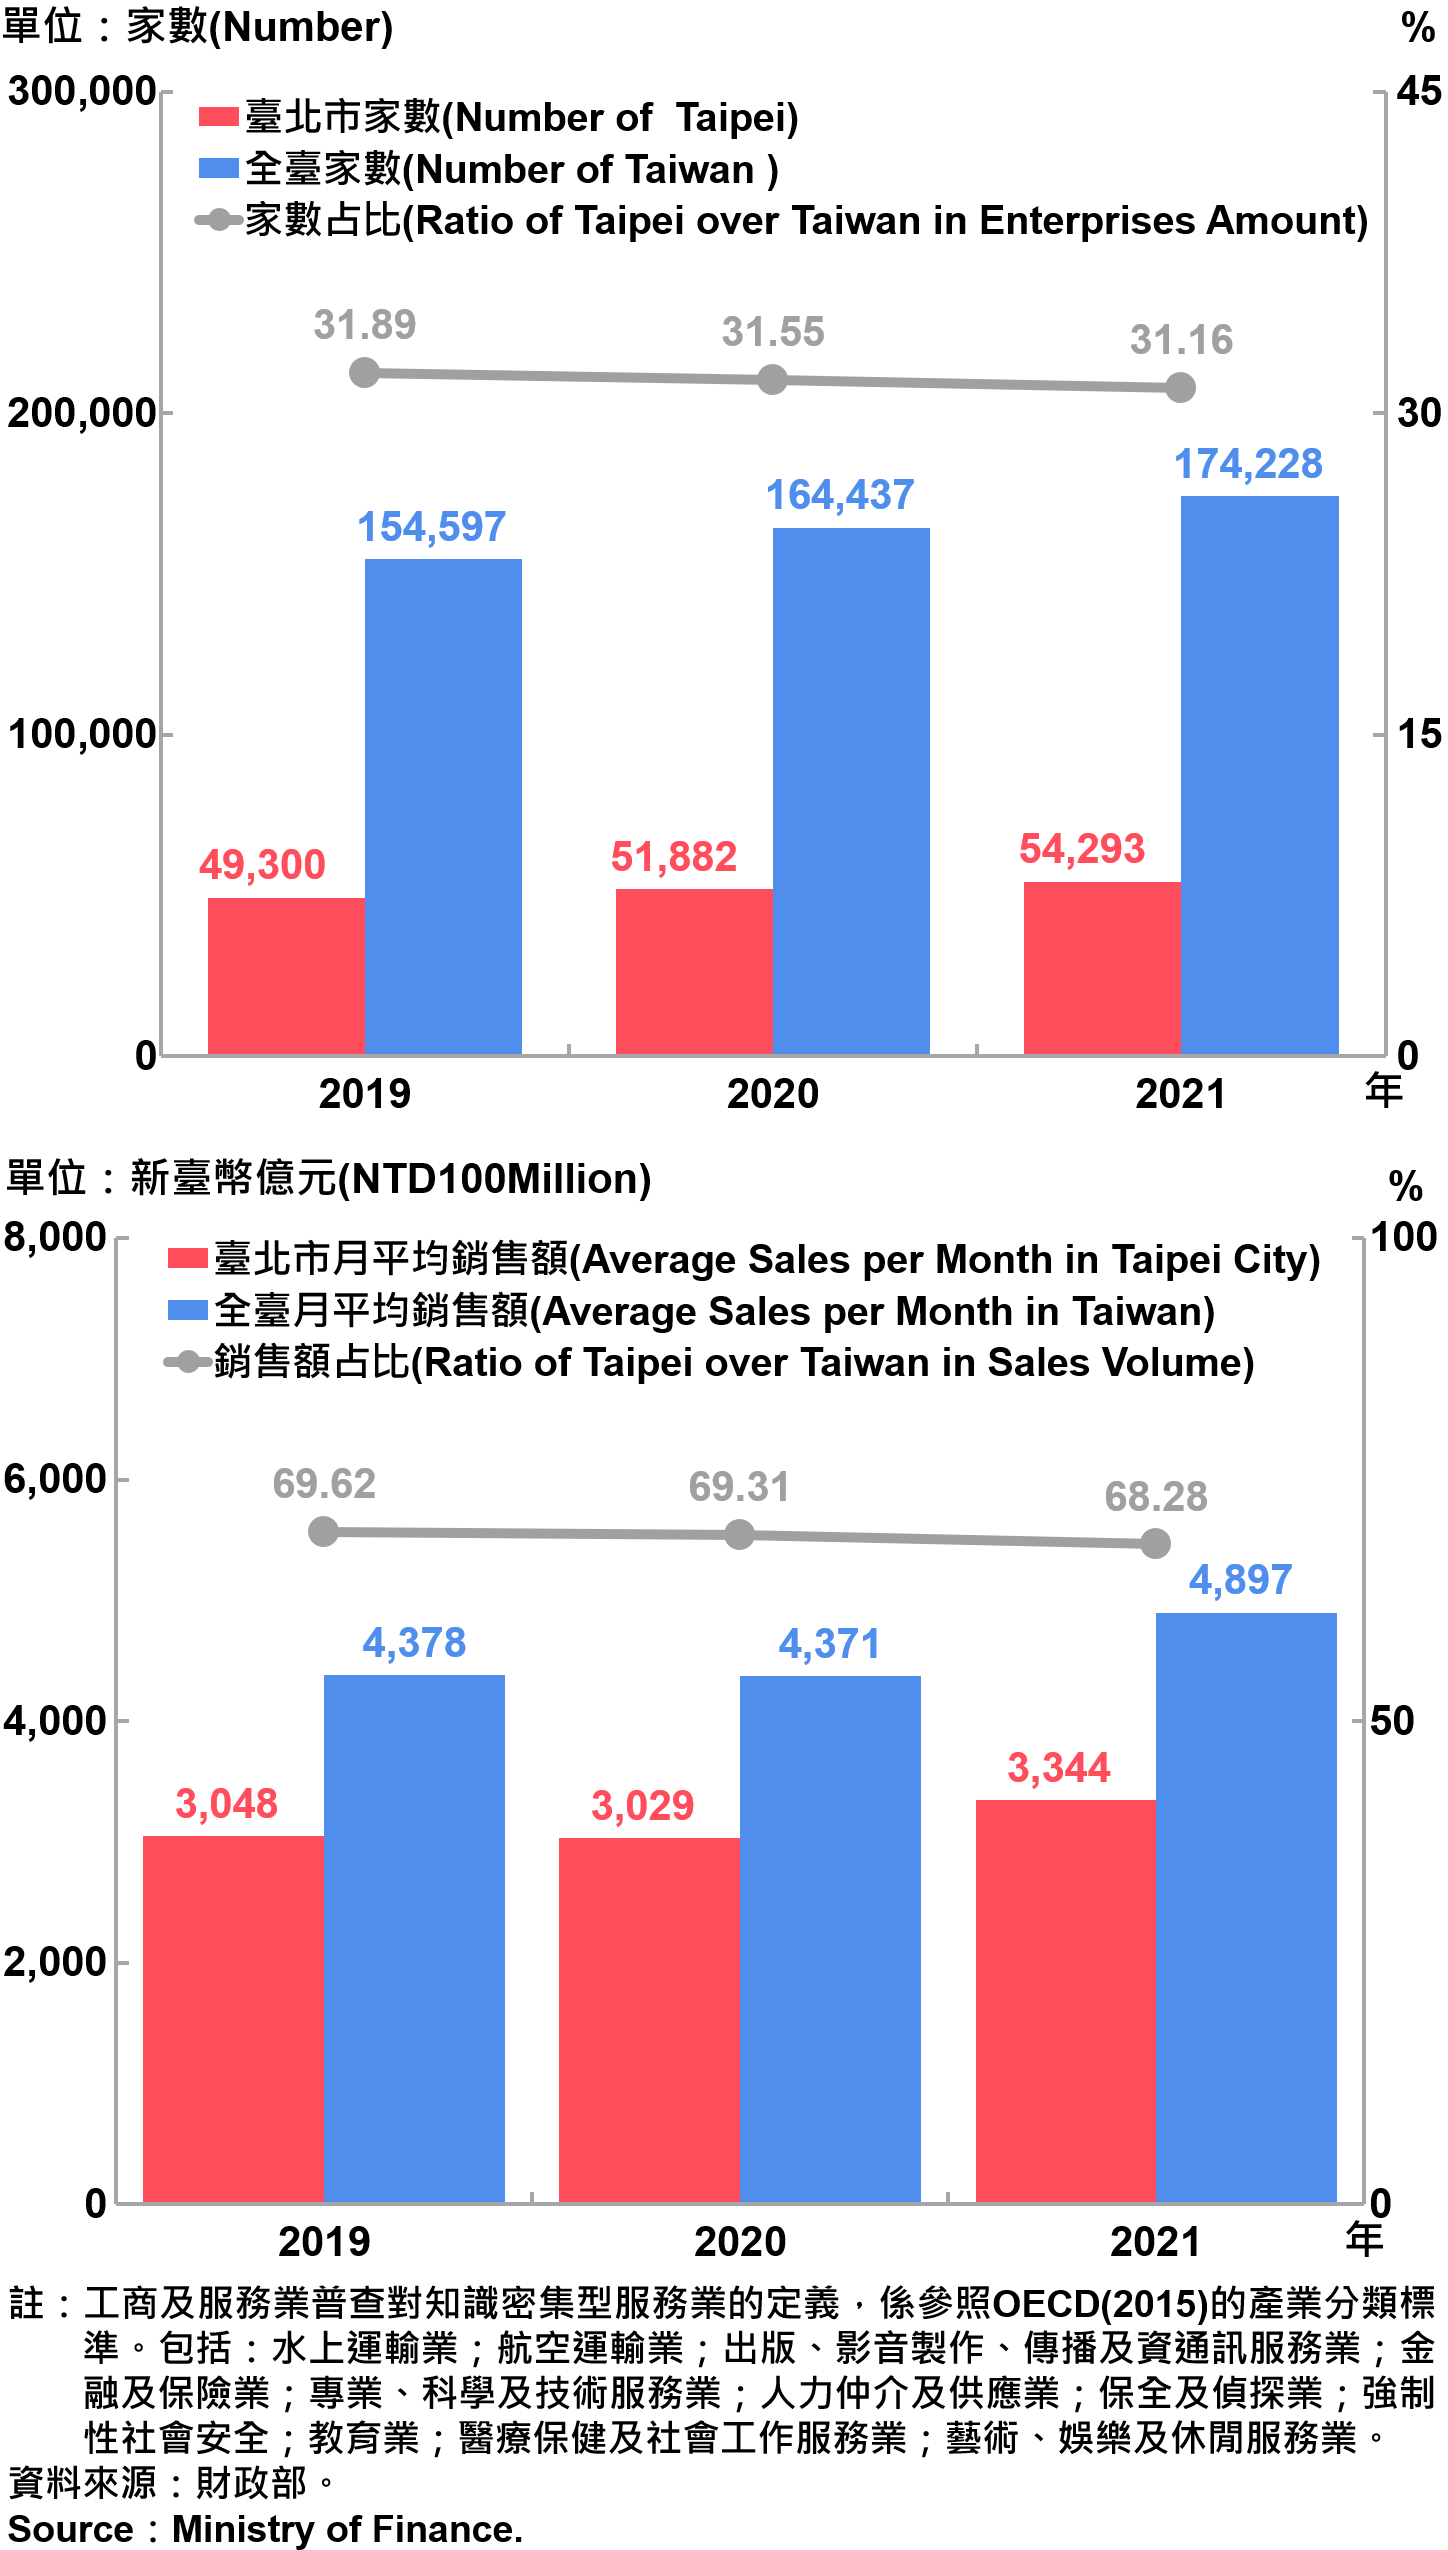 臺北市知識密集型服務業之家數及銷售額—2021 Statistics Knowledge Intensive Service Industry in Taipei City—2021